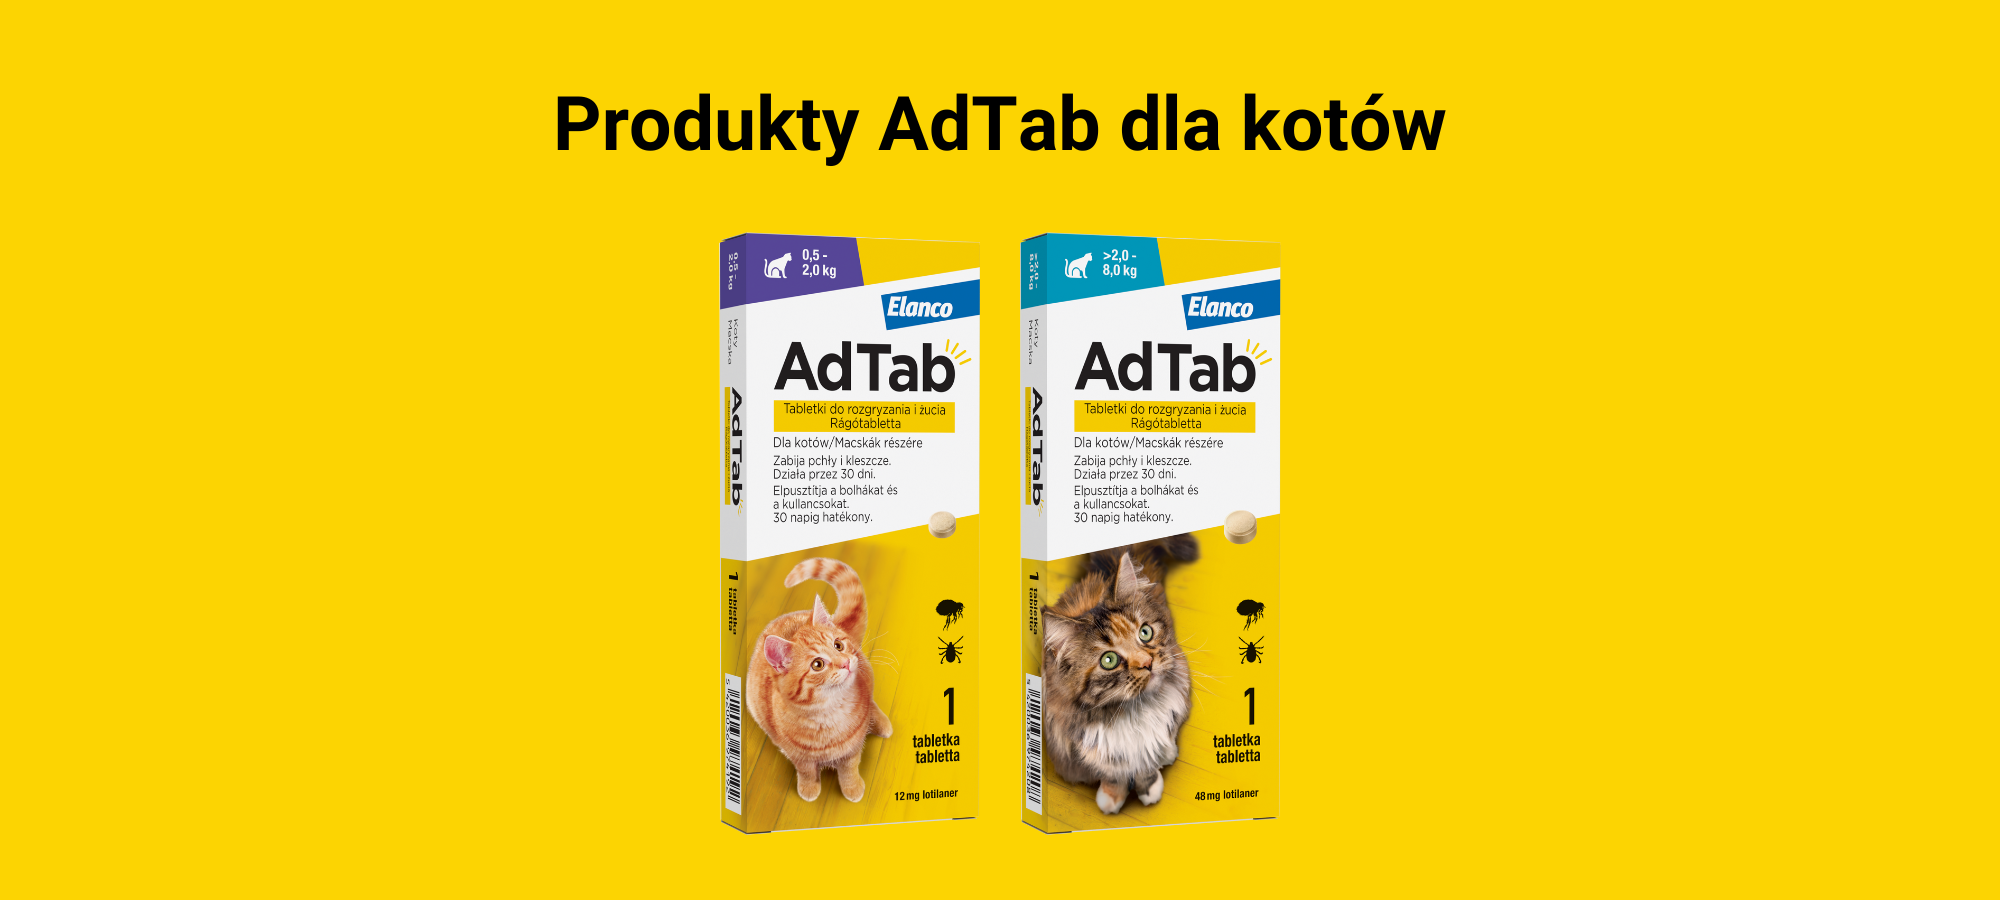 Tabletka na kleszcze dla kota AdTab